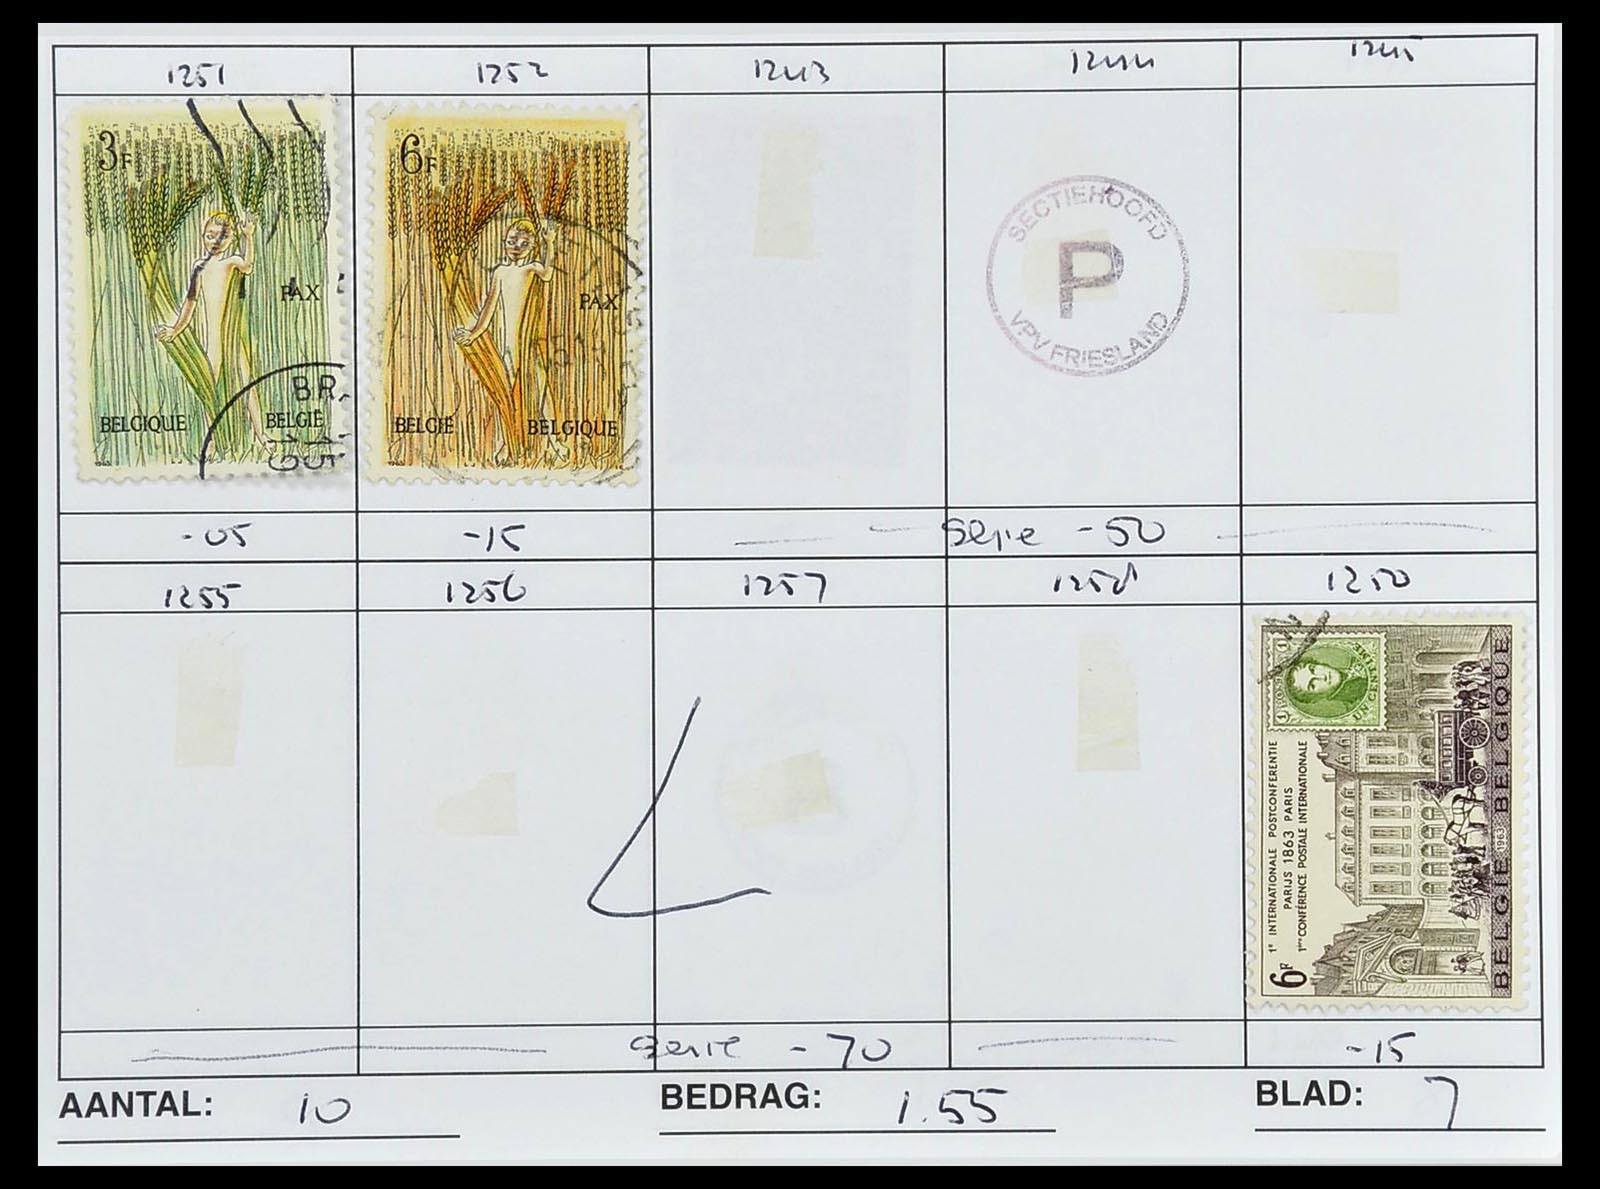 34612 1025 - Stamp Collection 34612 Wereld rondzendboekjes.